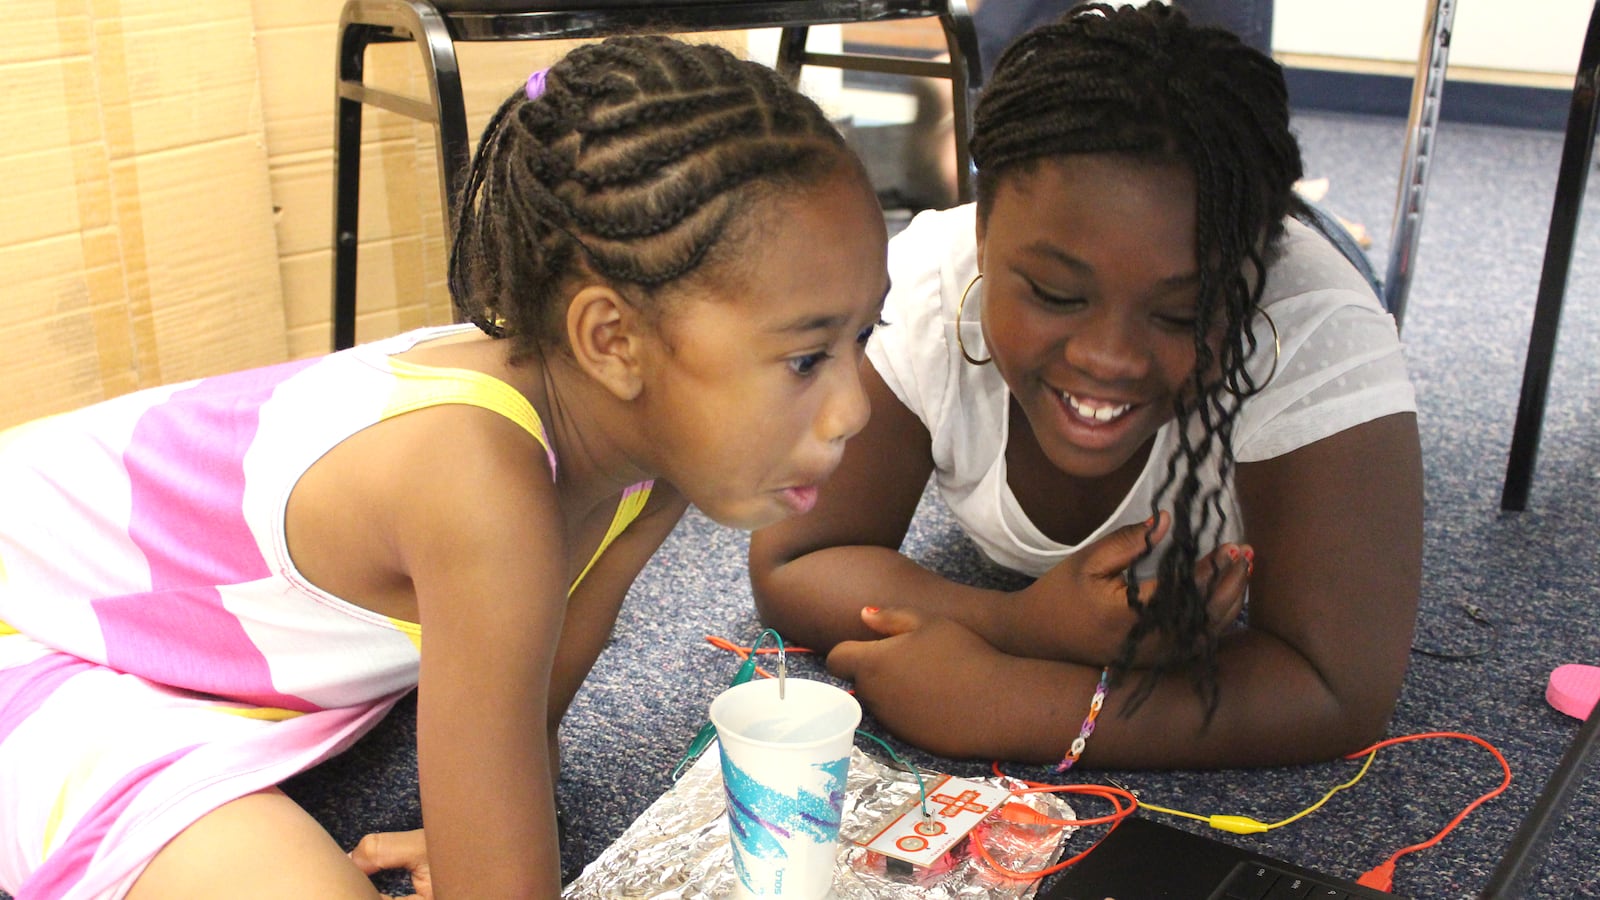 Students Maliah and Kayla at the Imaginarium's Summer Lab camp at Columbine Elementary School.